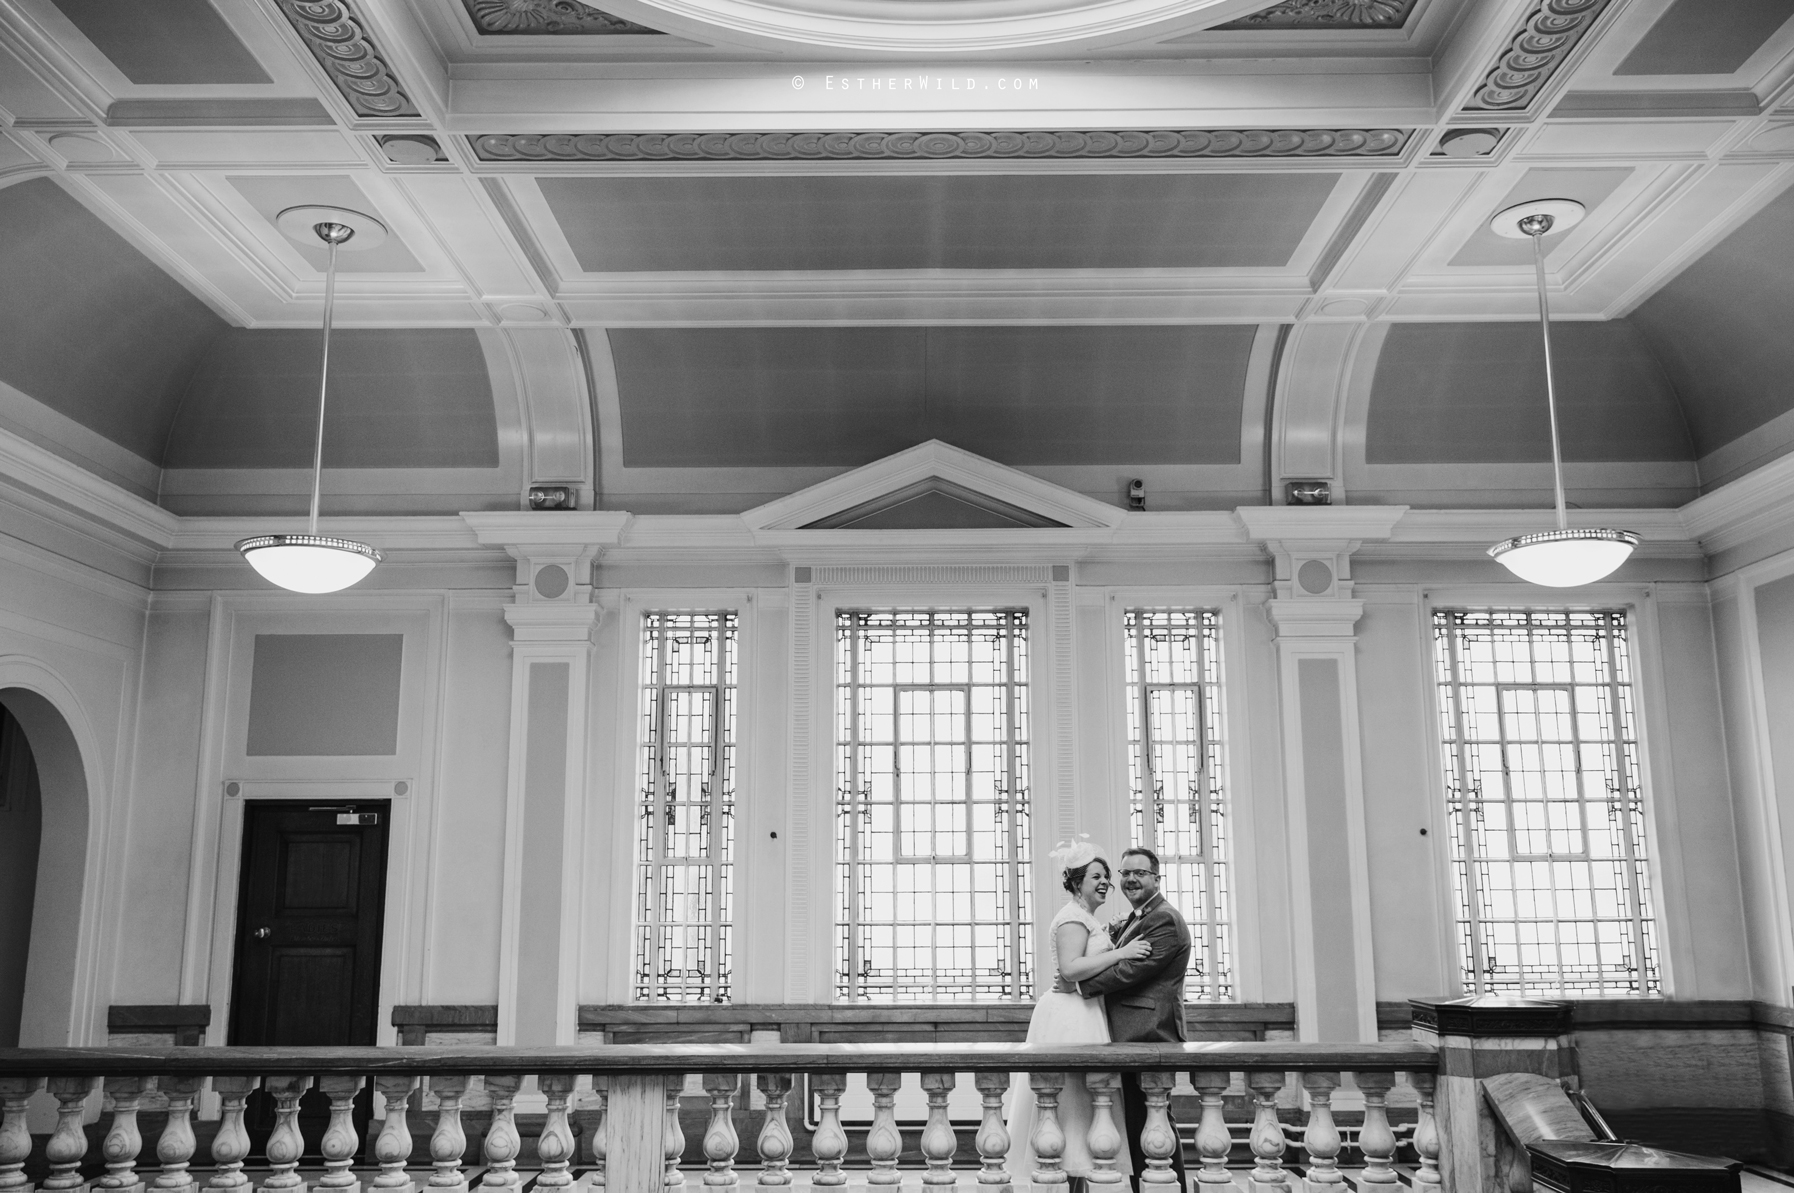 Islington_Town_Hall_Assembly_Hall_Council_Chamber_The_Star_Pub_London_Sacred_Wedding_Copyright_Esther_Wild_Photographer_IMG_0578-1.jpg